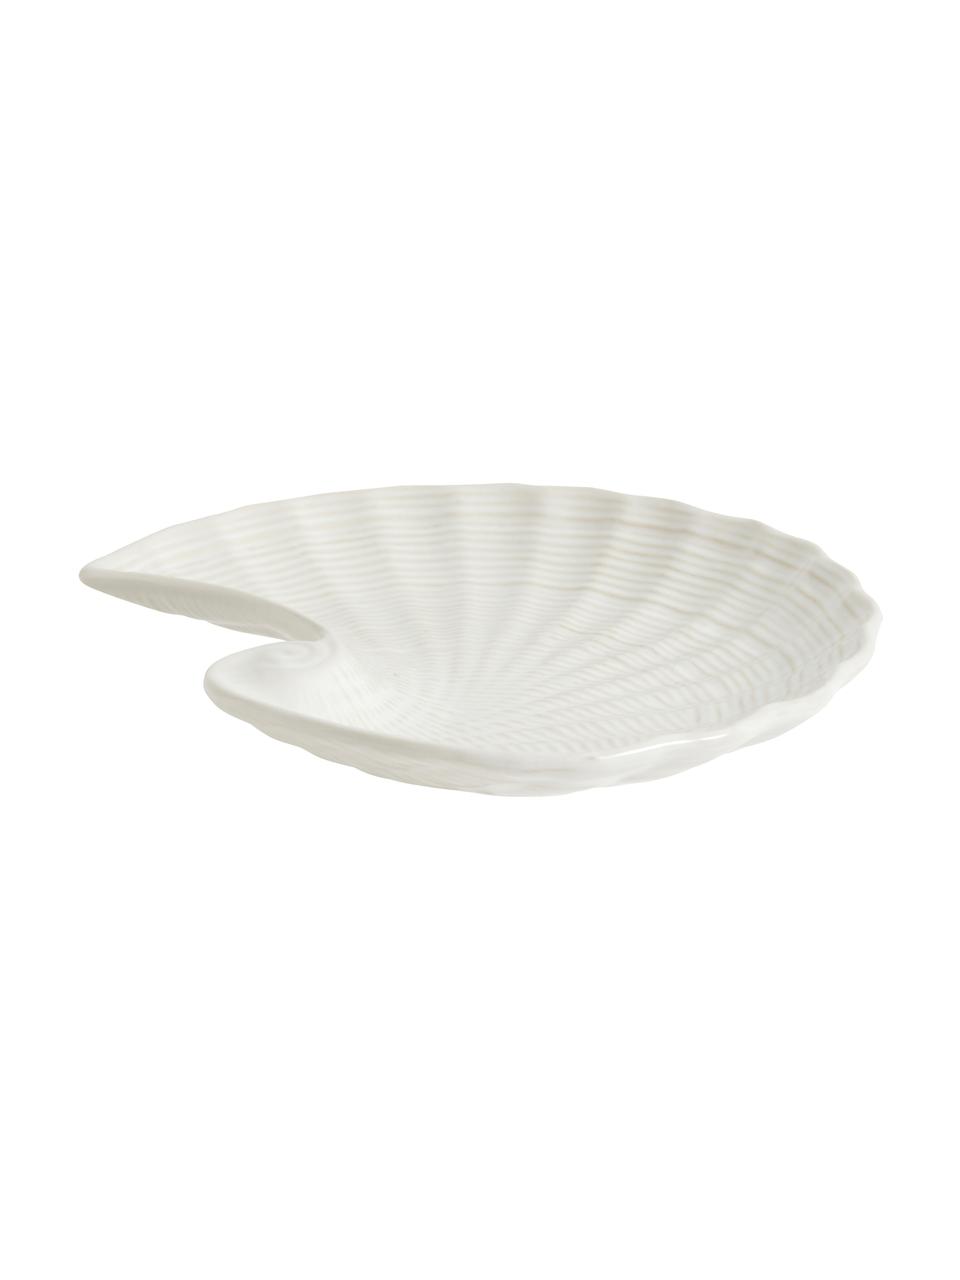 Deko-Schale Gullfoss, B 18 cm, Keramik, Weiß, B 18 x H 2 cm